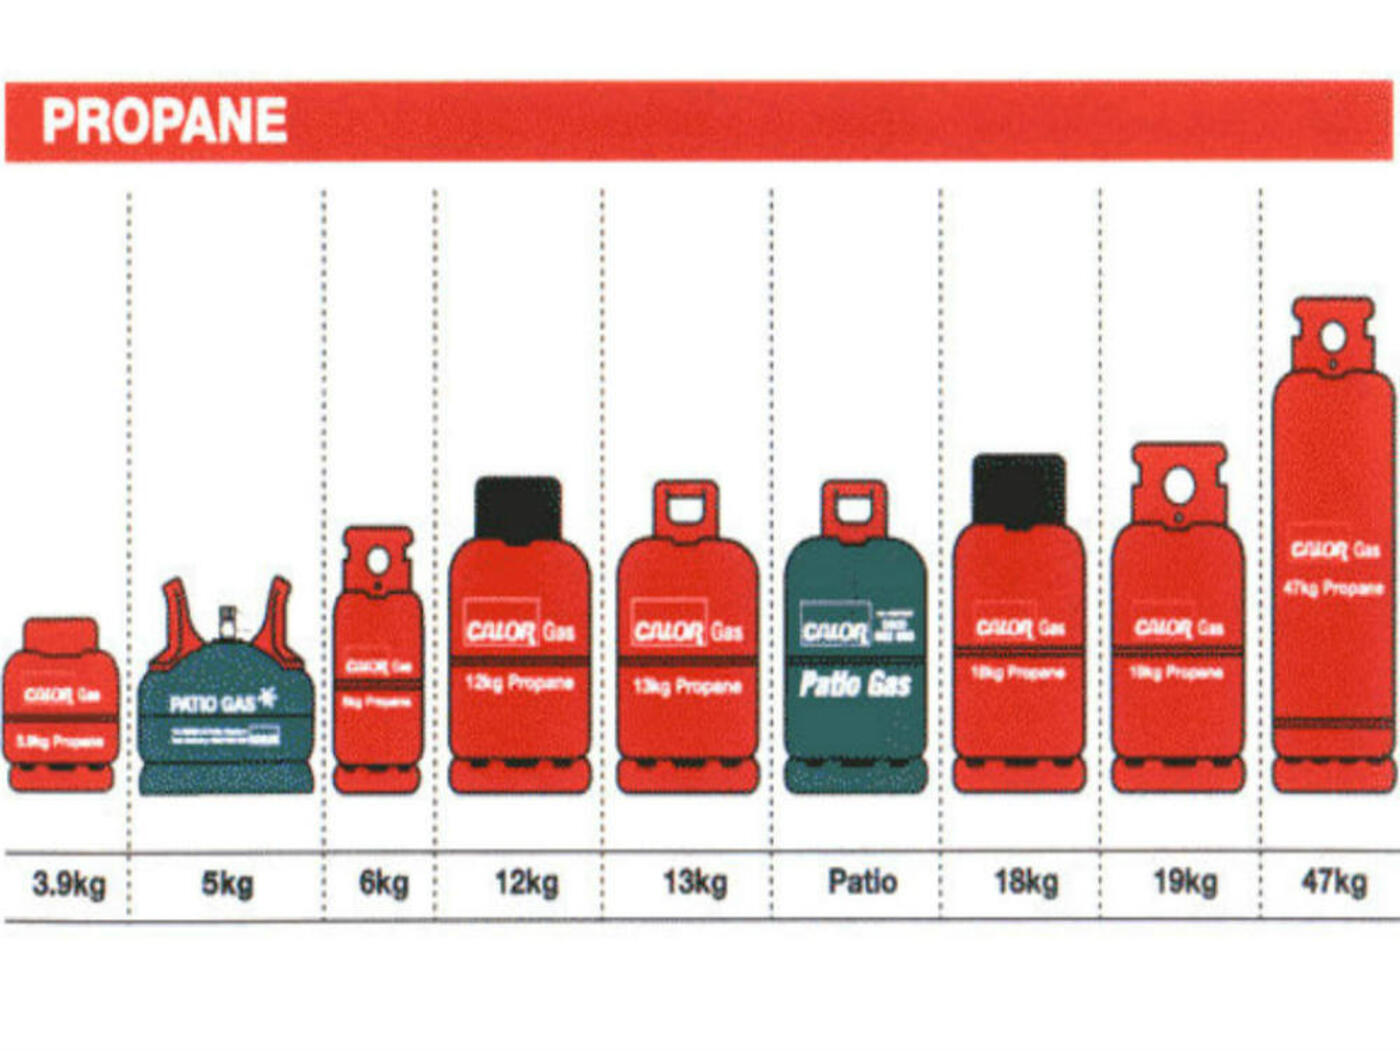 Propane gas bottle sizes